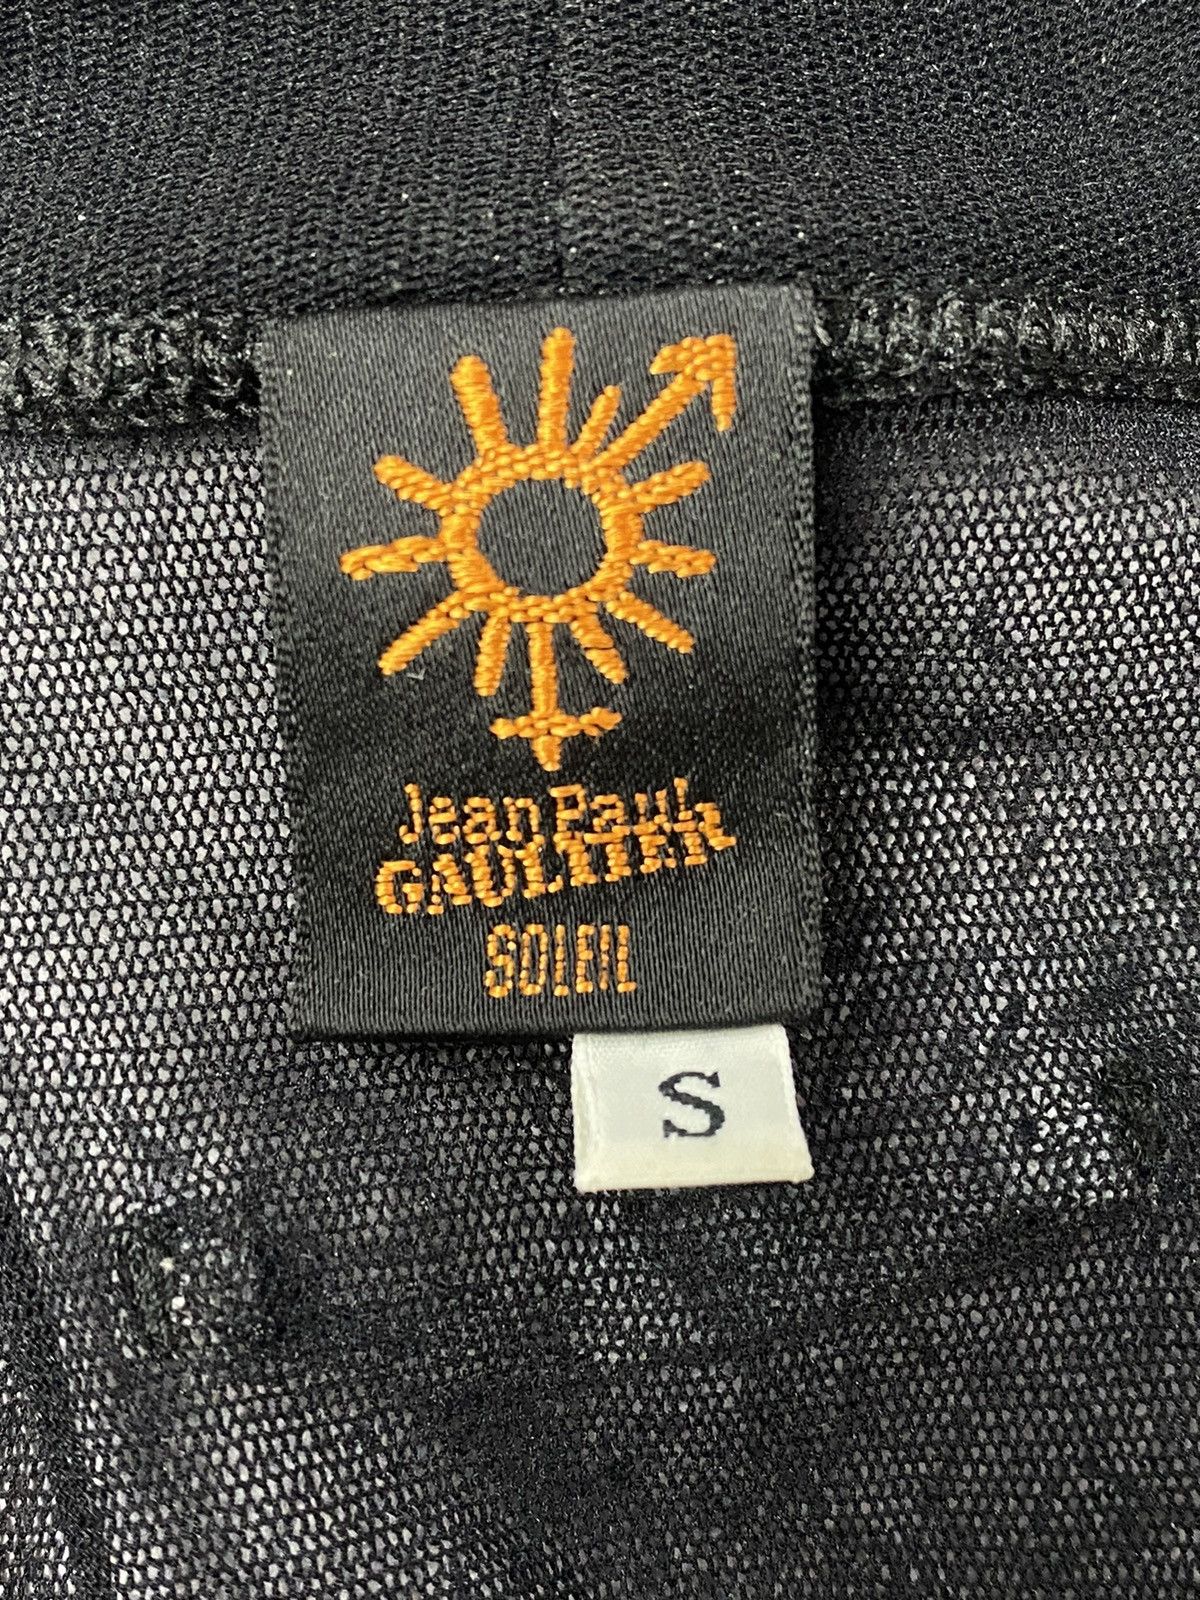 Vintage VTG Jean Paul Gaultier Mesh Soliel LongSleeve Shirt Cardigan Size S / US 4 / IT 40 - 14 Thumbnail